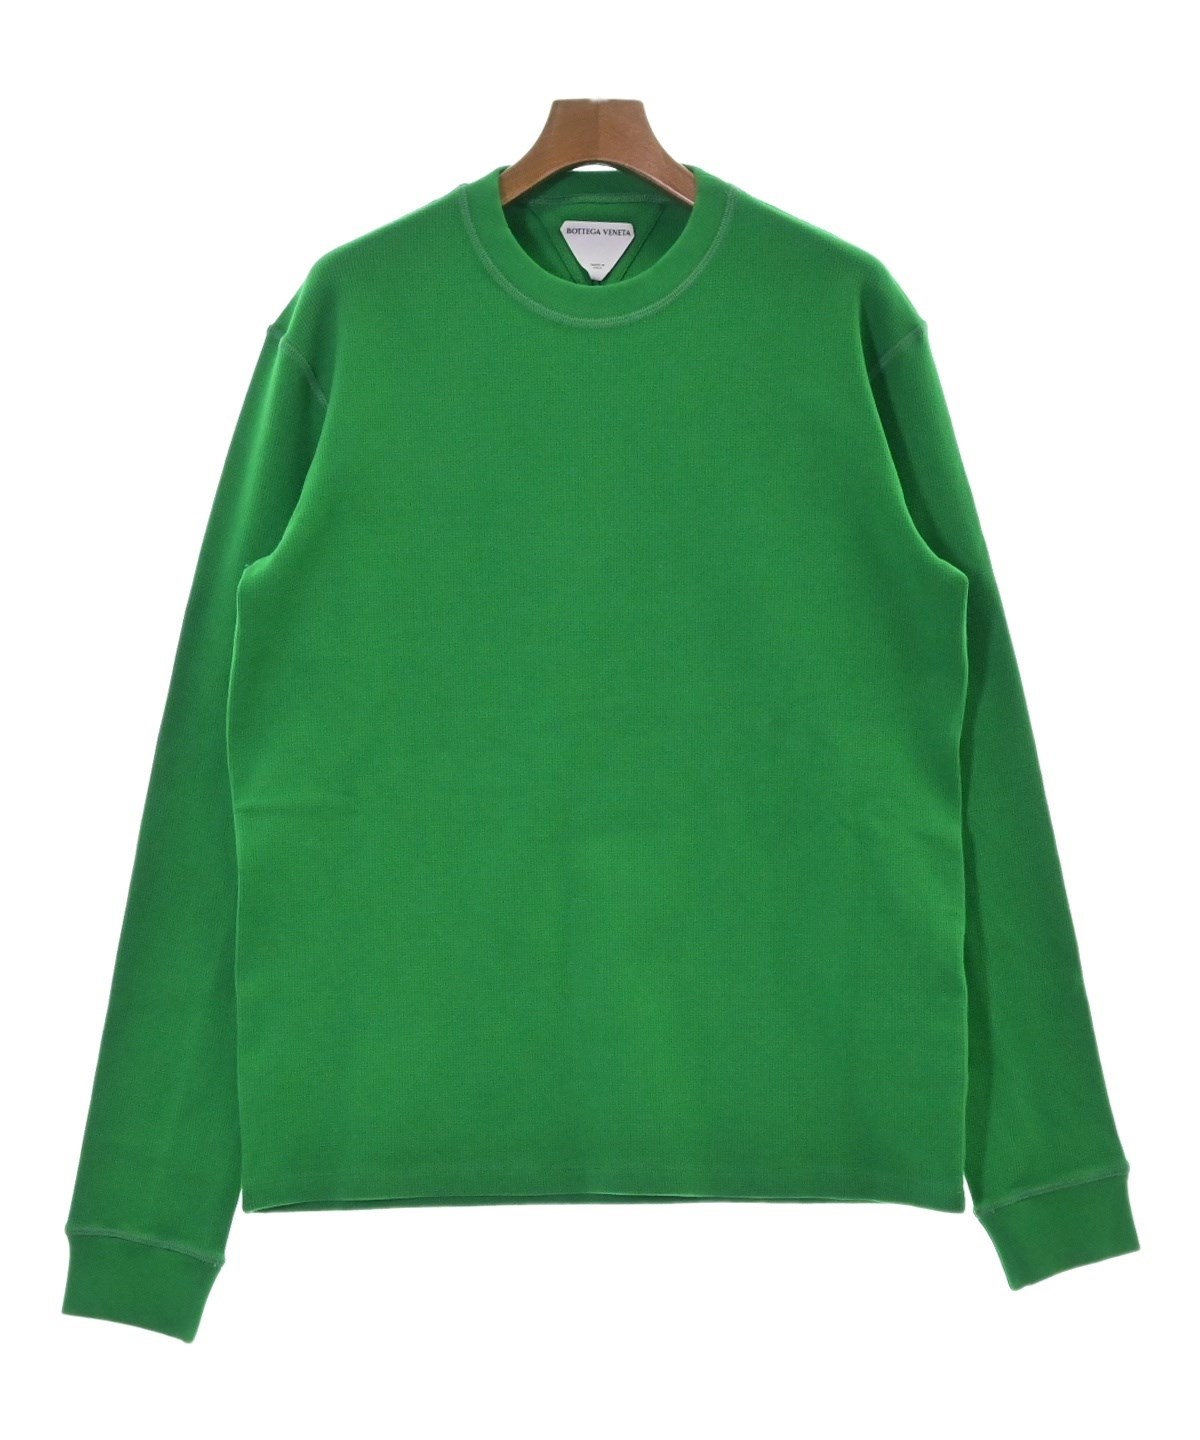 BOTTEGA VENETA（ボッテガヴェネタ）Tシャツ・カットソー 緑 サイズ:L 